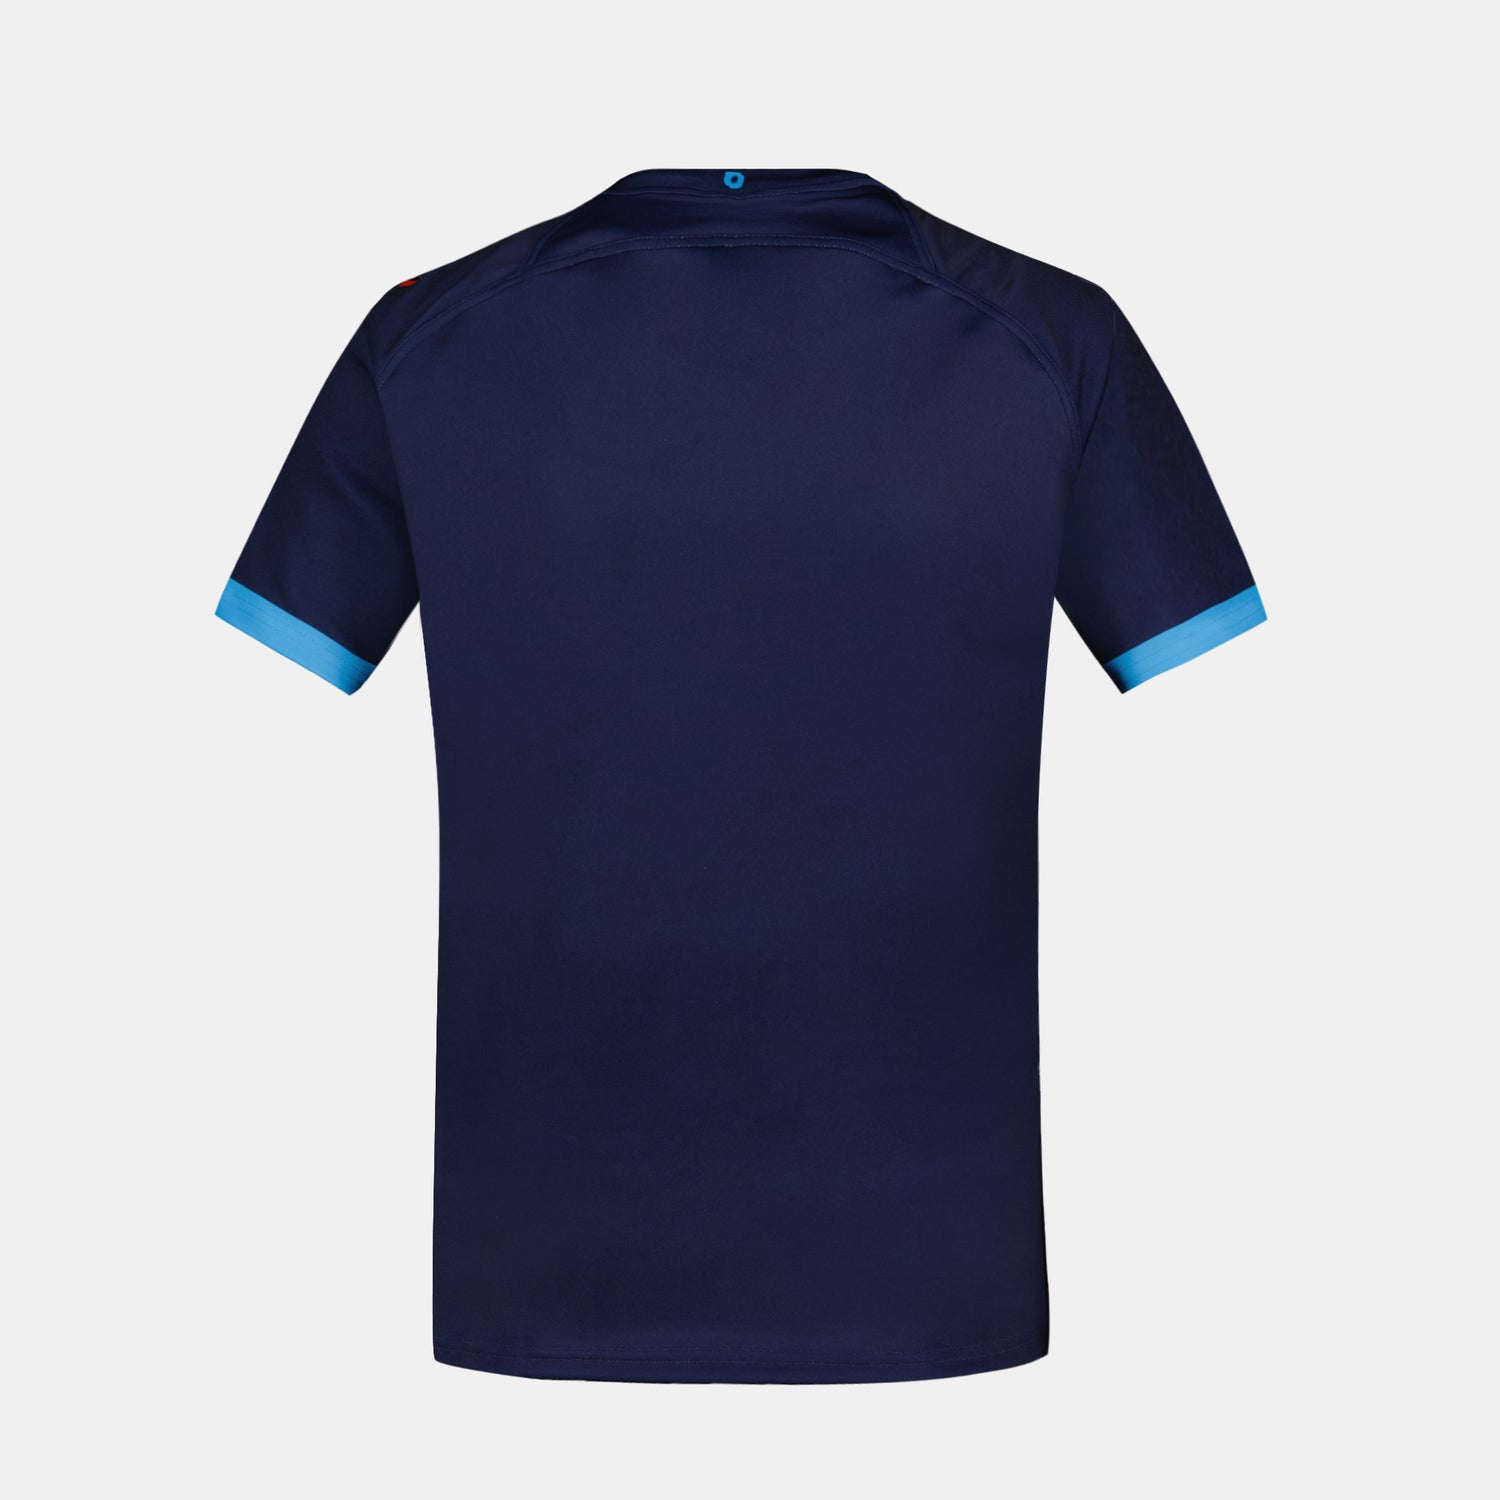 2321201-MHR XV Maillot Replica M bleu marine | T-shirt Homme